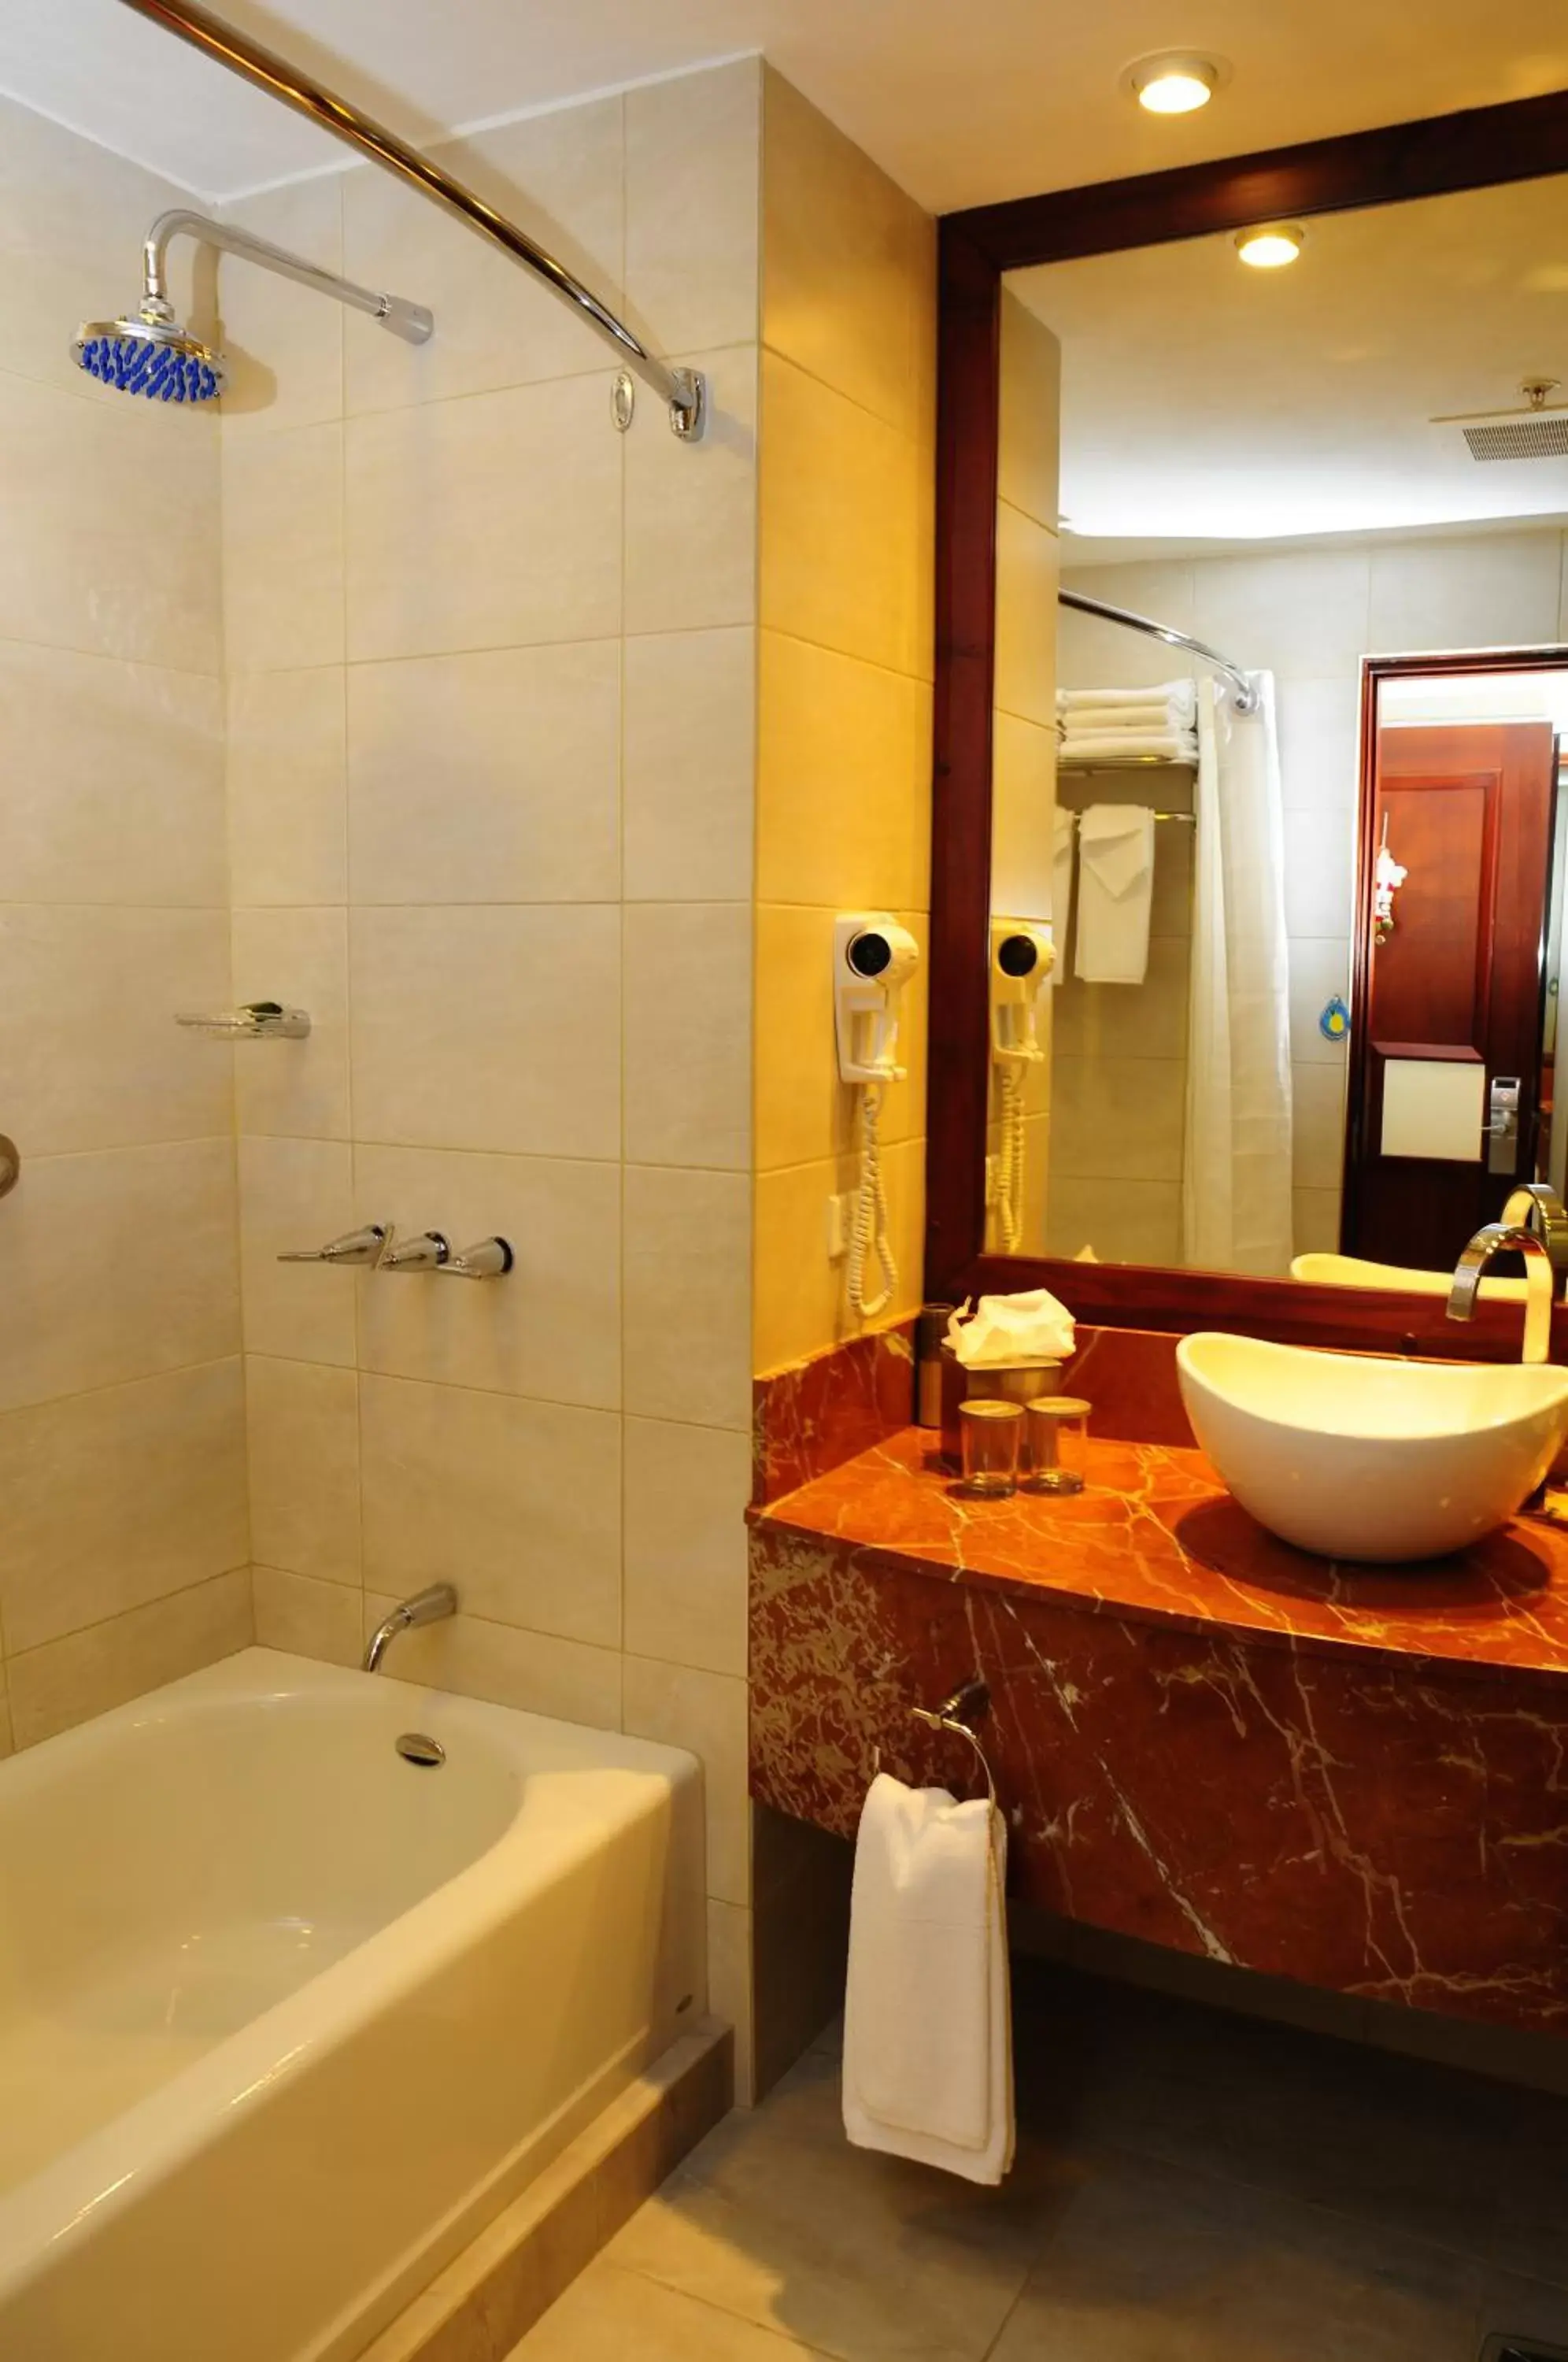 Bathroom in Radisson Hotel San Jose - Costa Rica